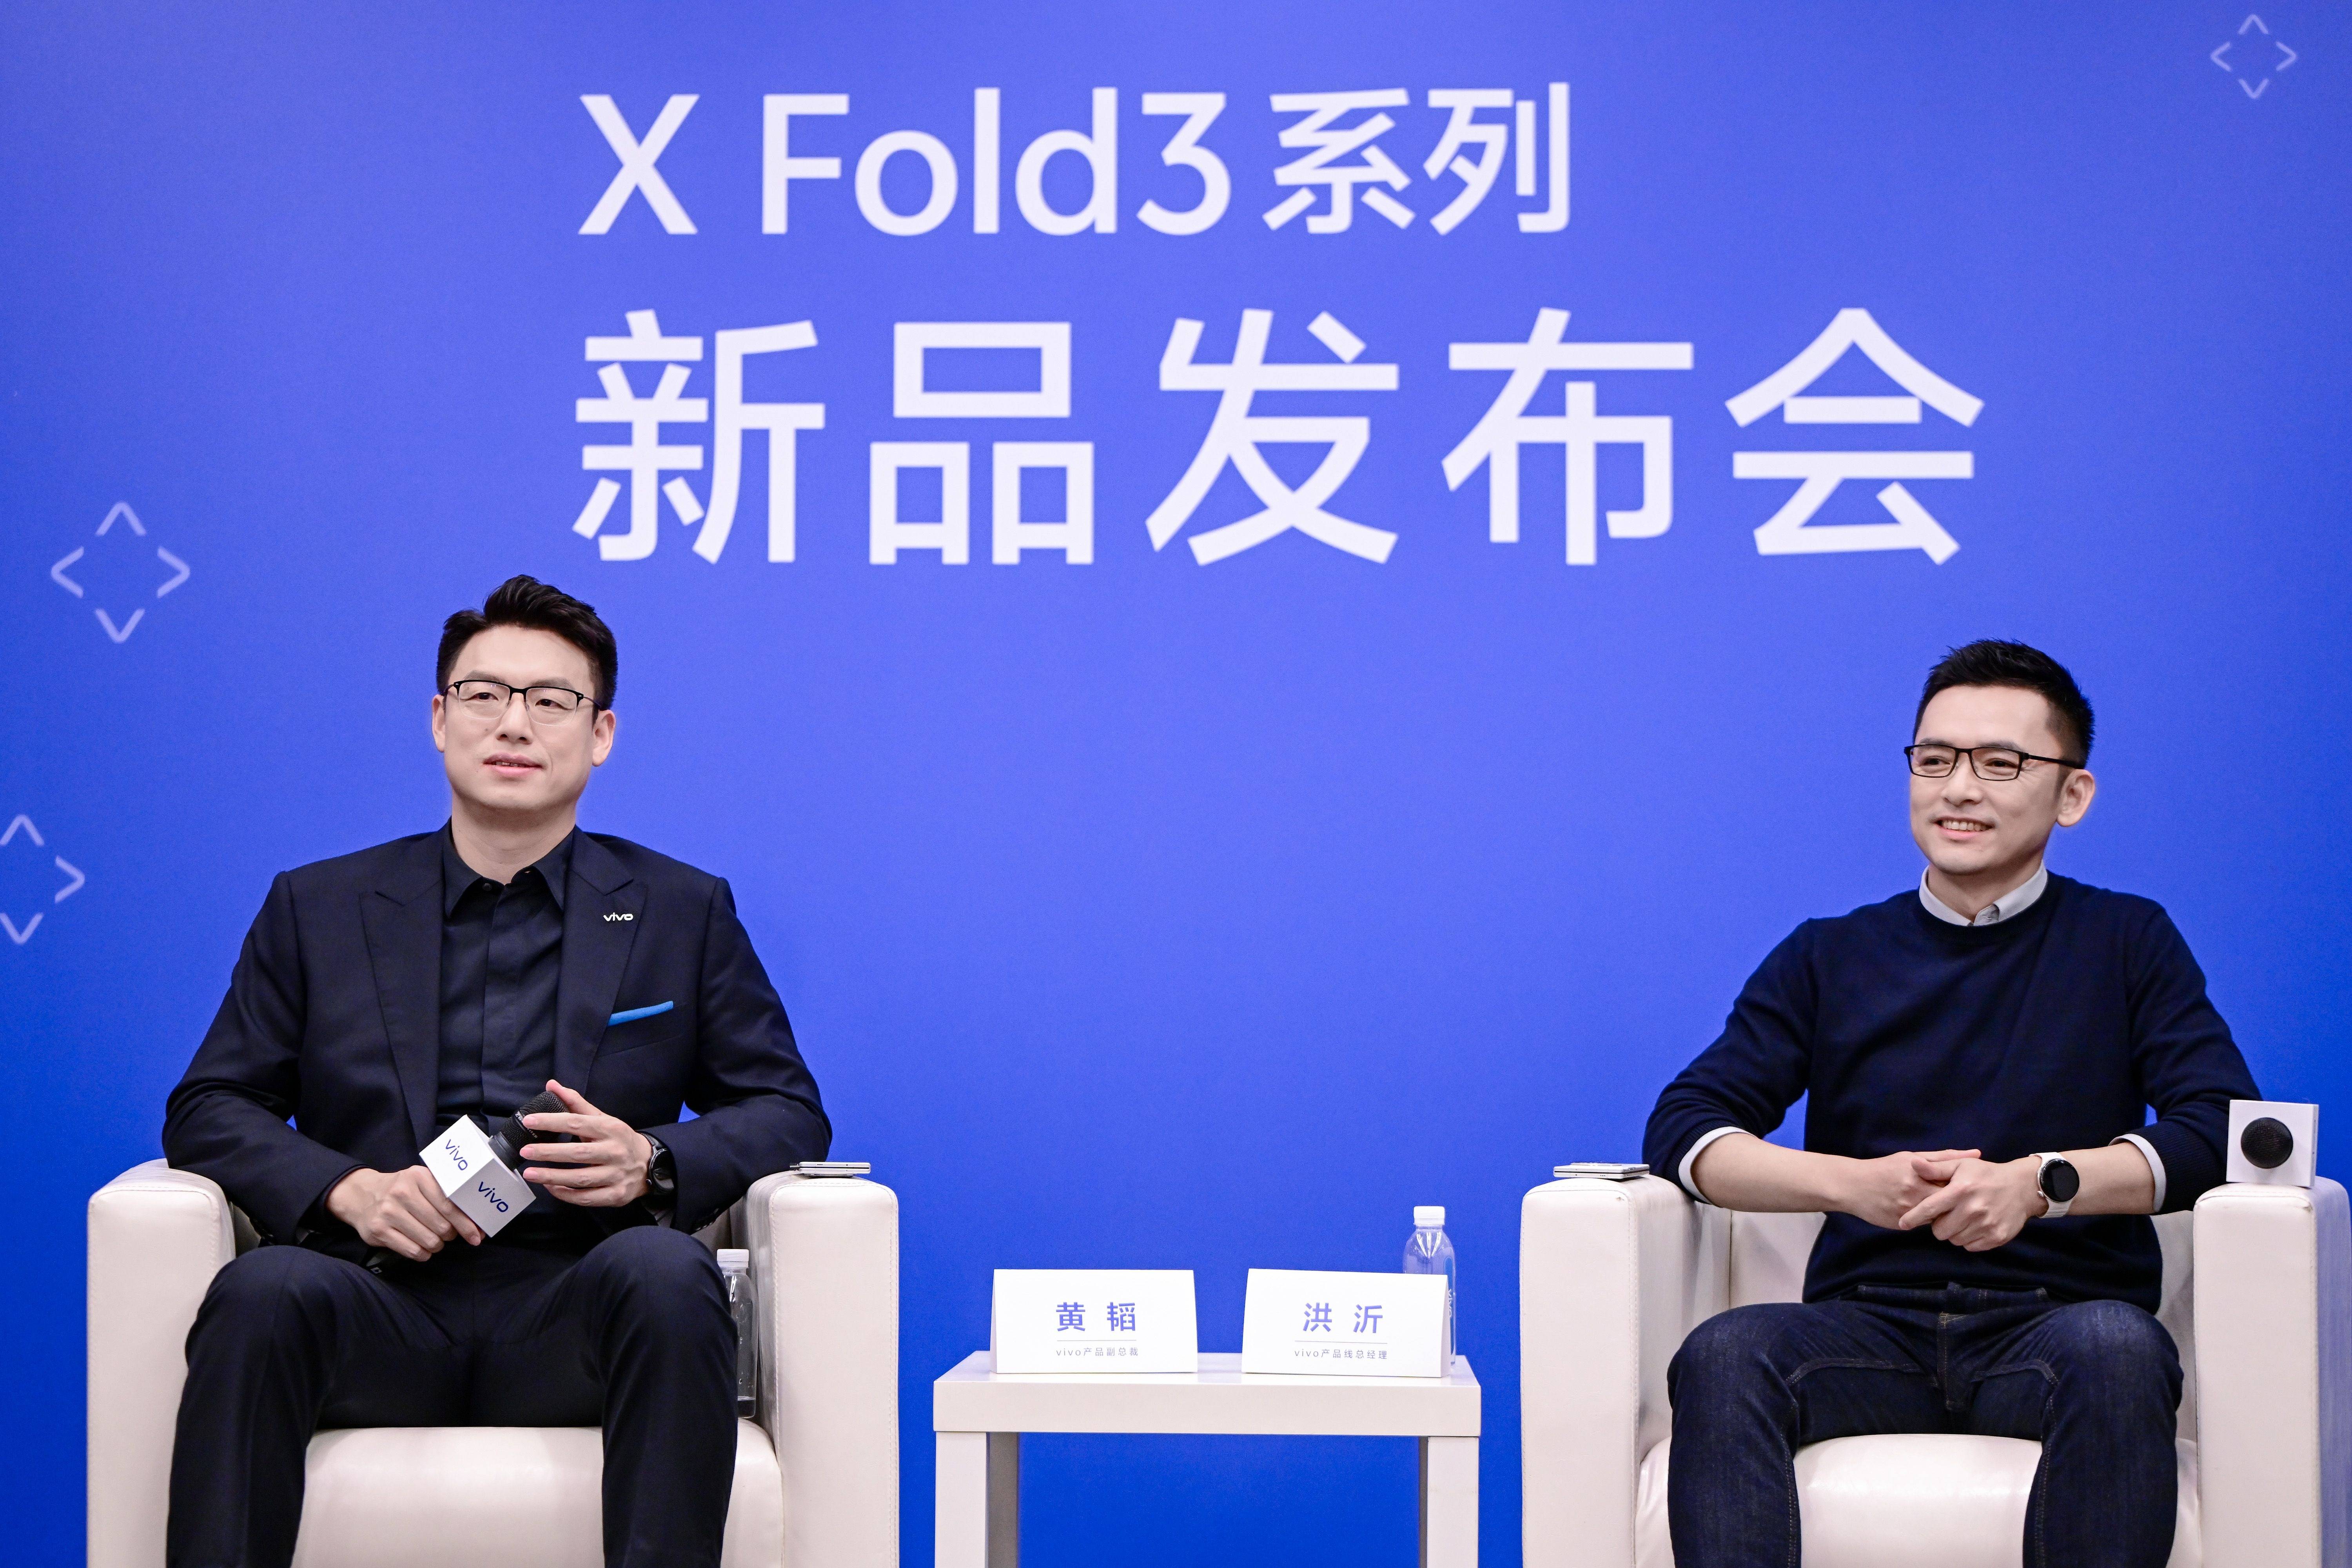 vivo黄韬： 坚持先旗舰后折叠，X Fold3将拥抱年轻用户